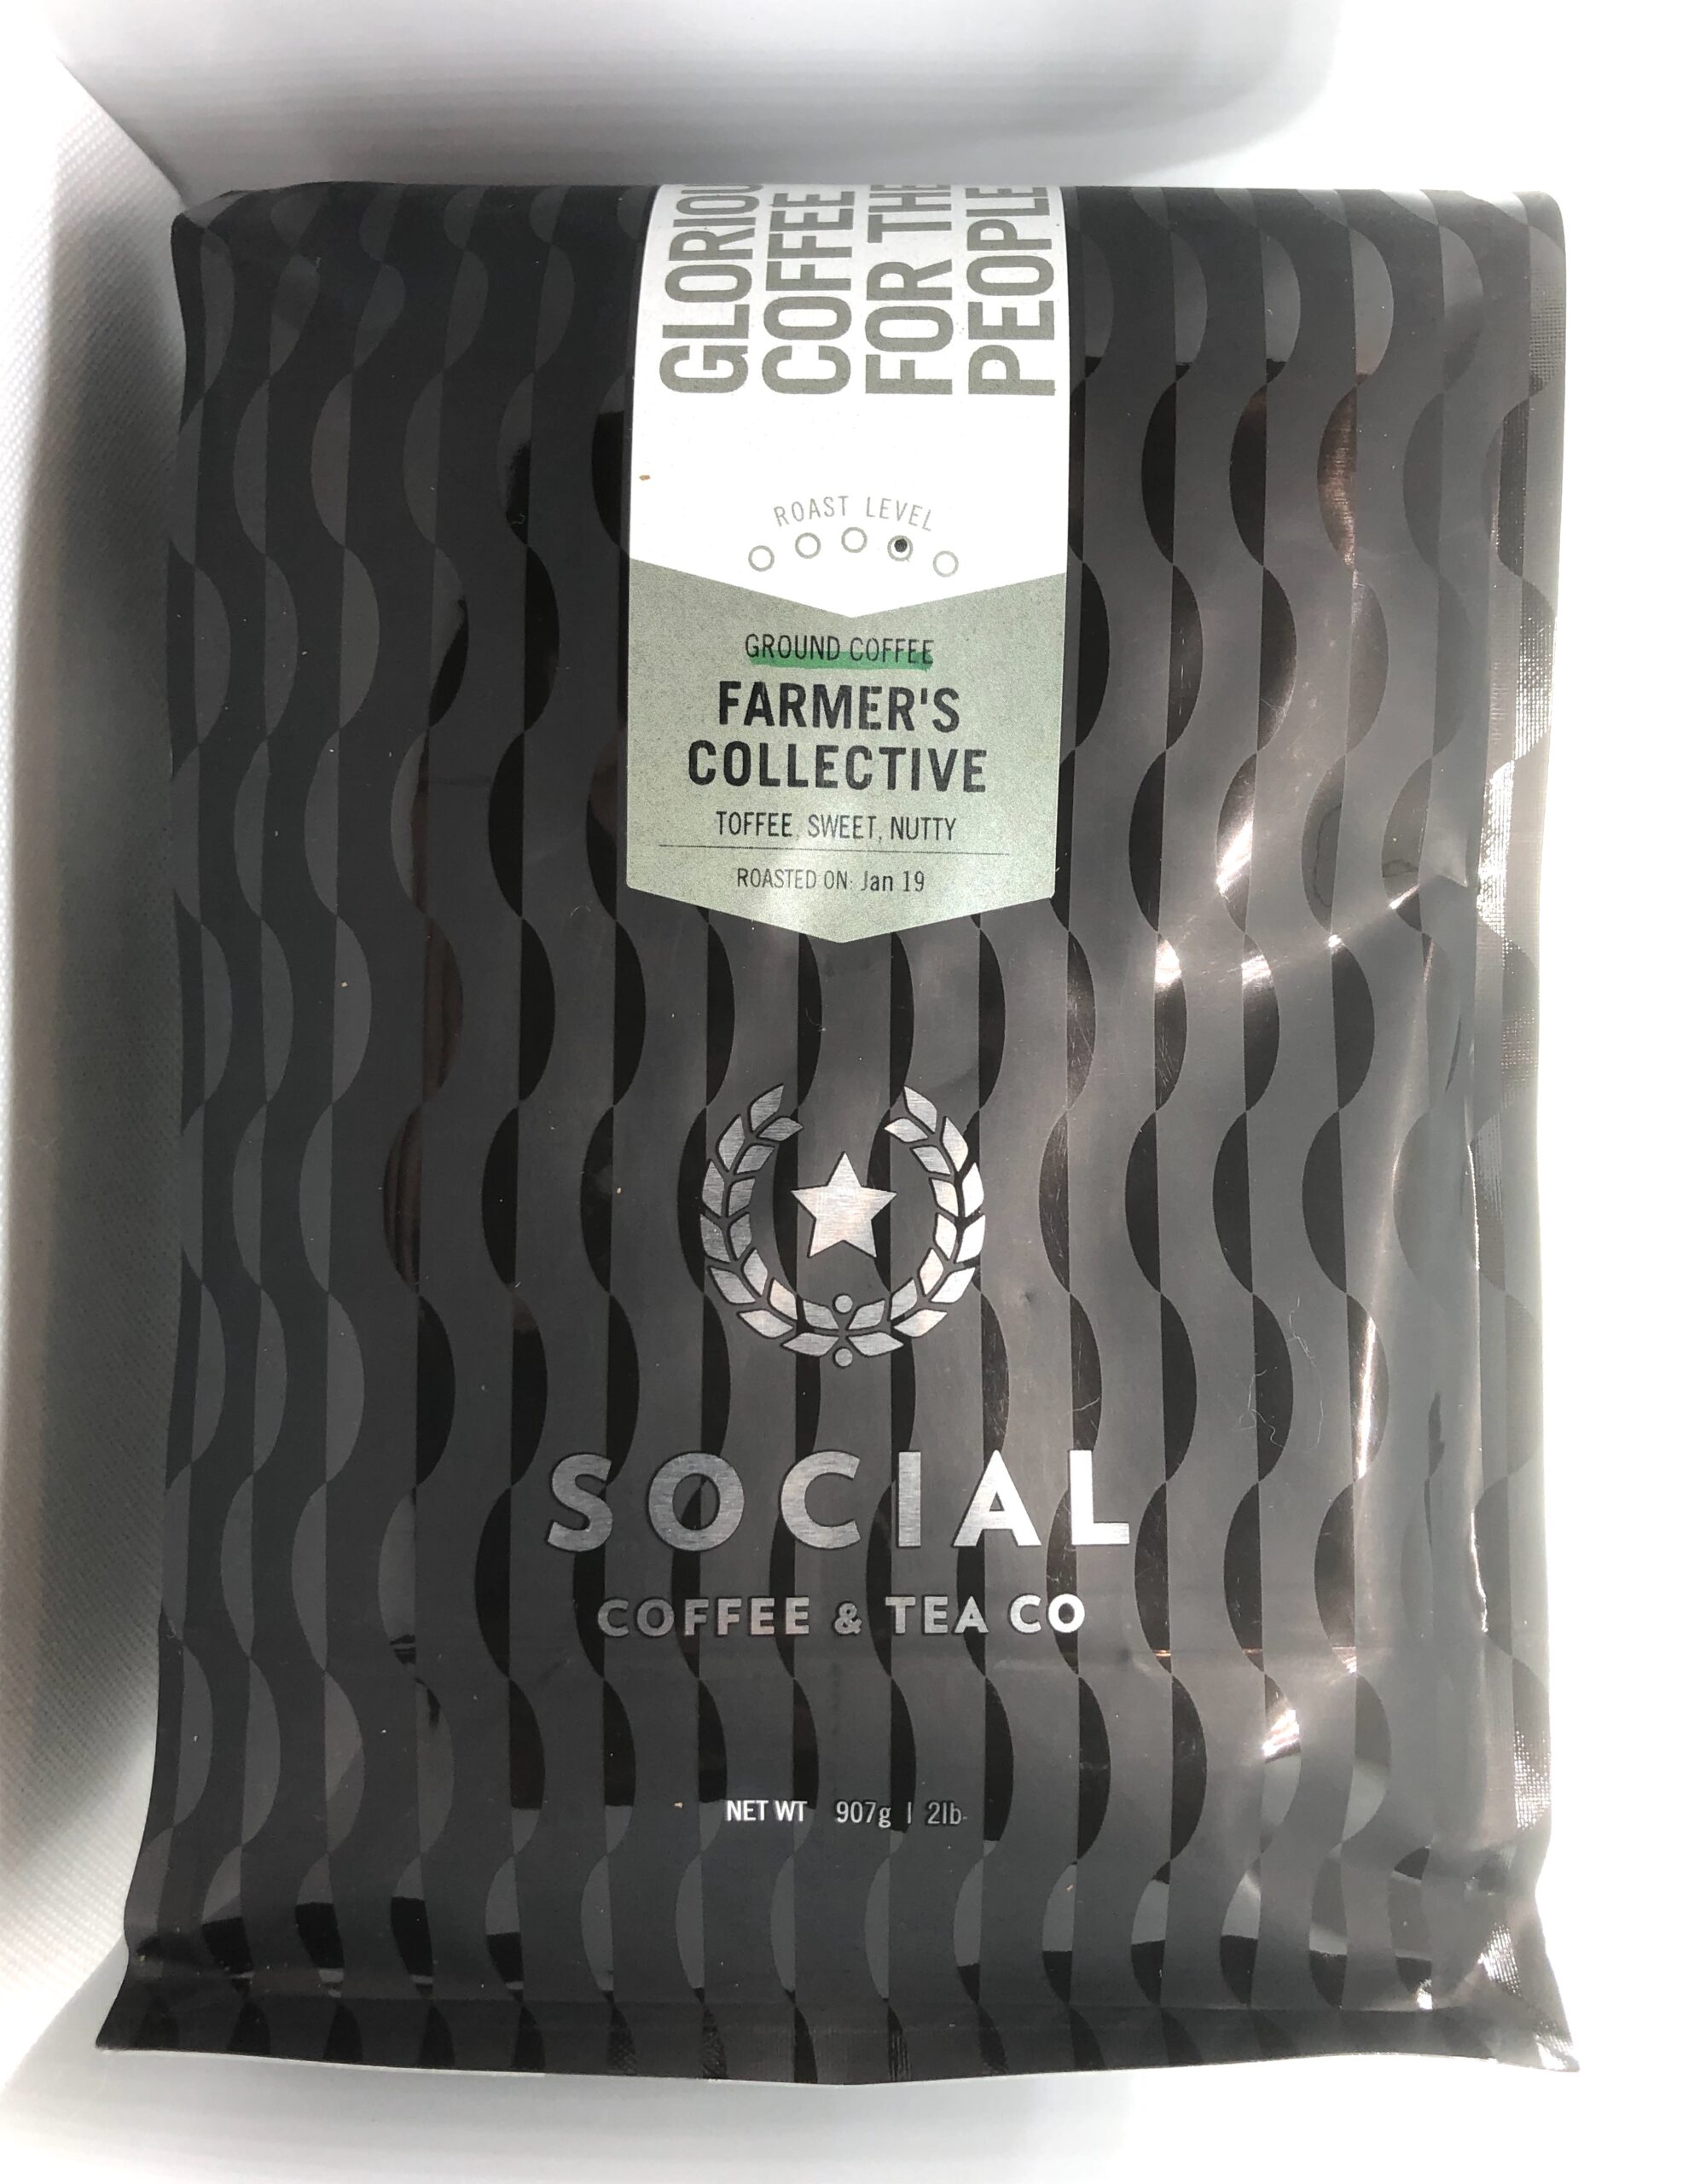 Farmers Collective Coffee bag